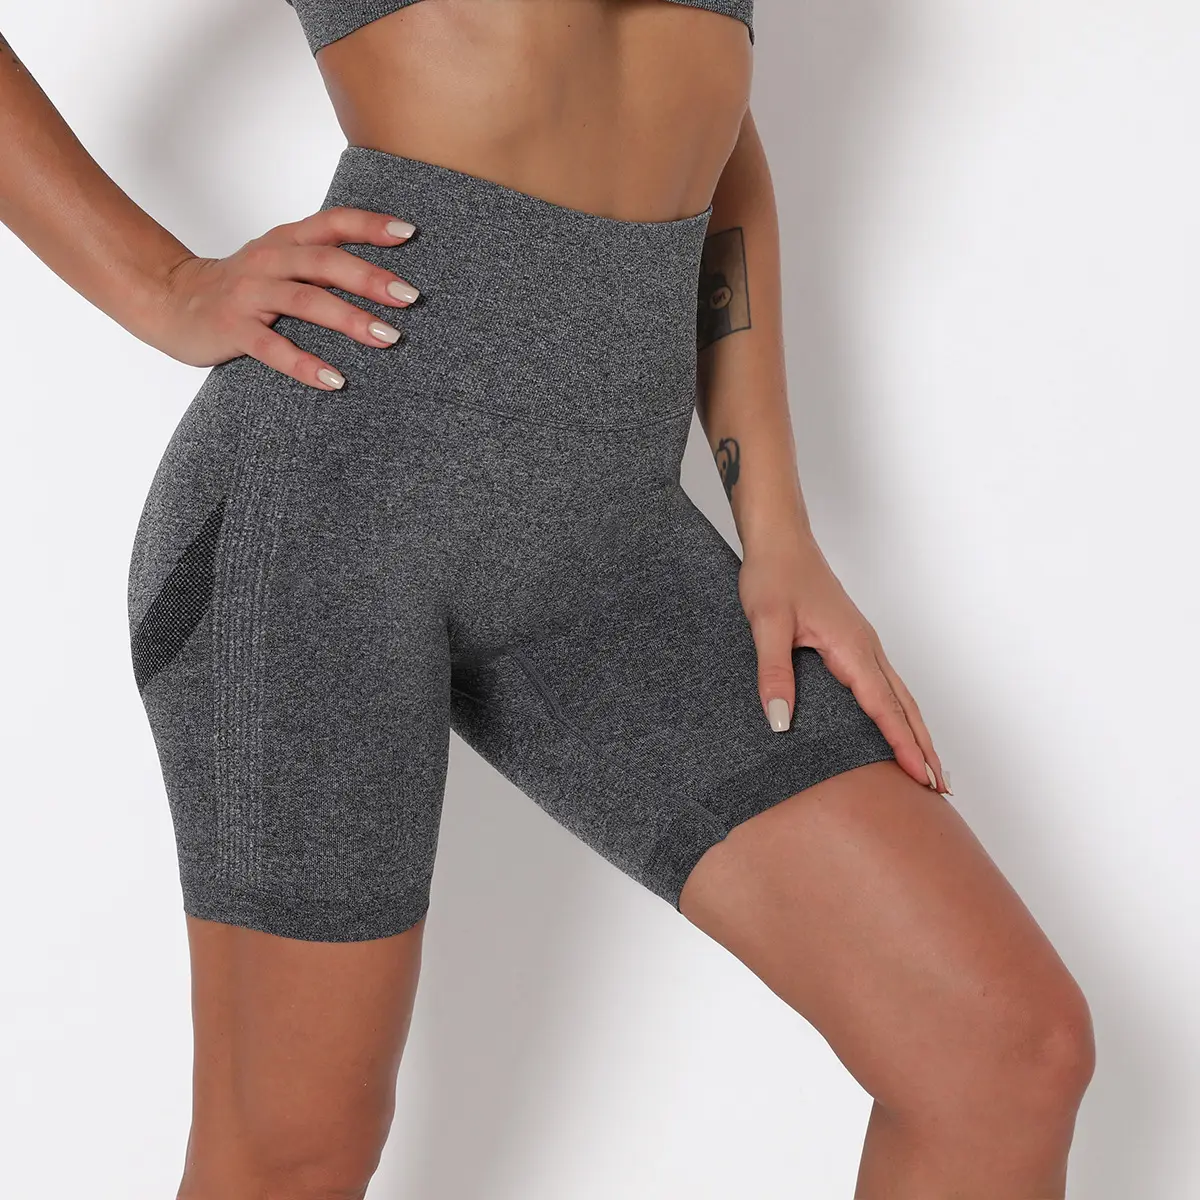 Wholesales New Fashion Seamless High Elasticity Quick Dry High Waisted Women Yoga Shorts